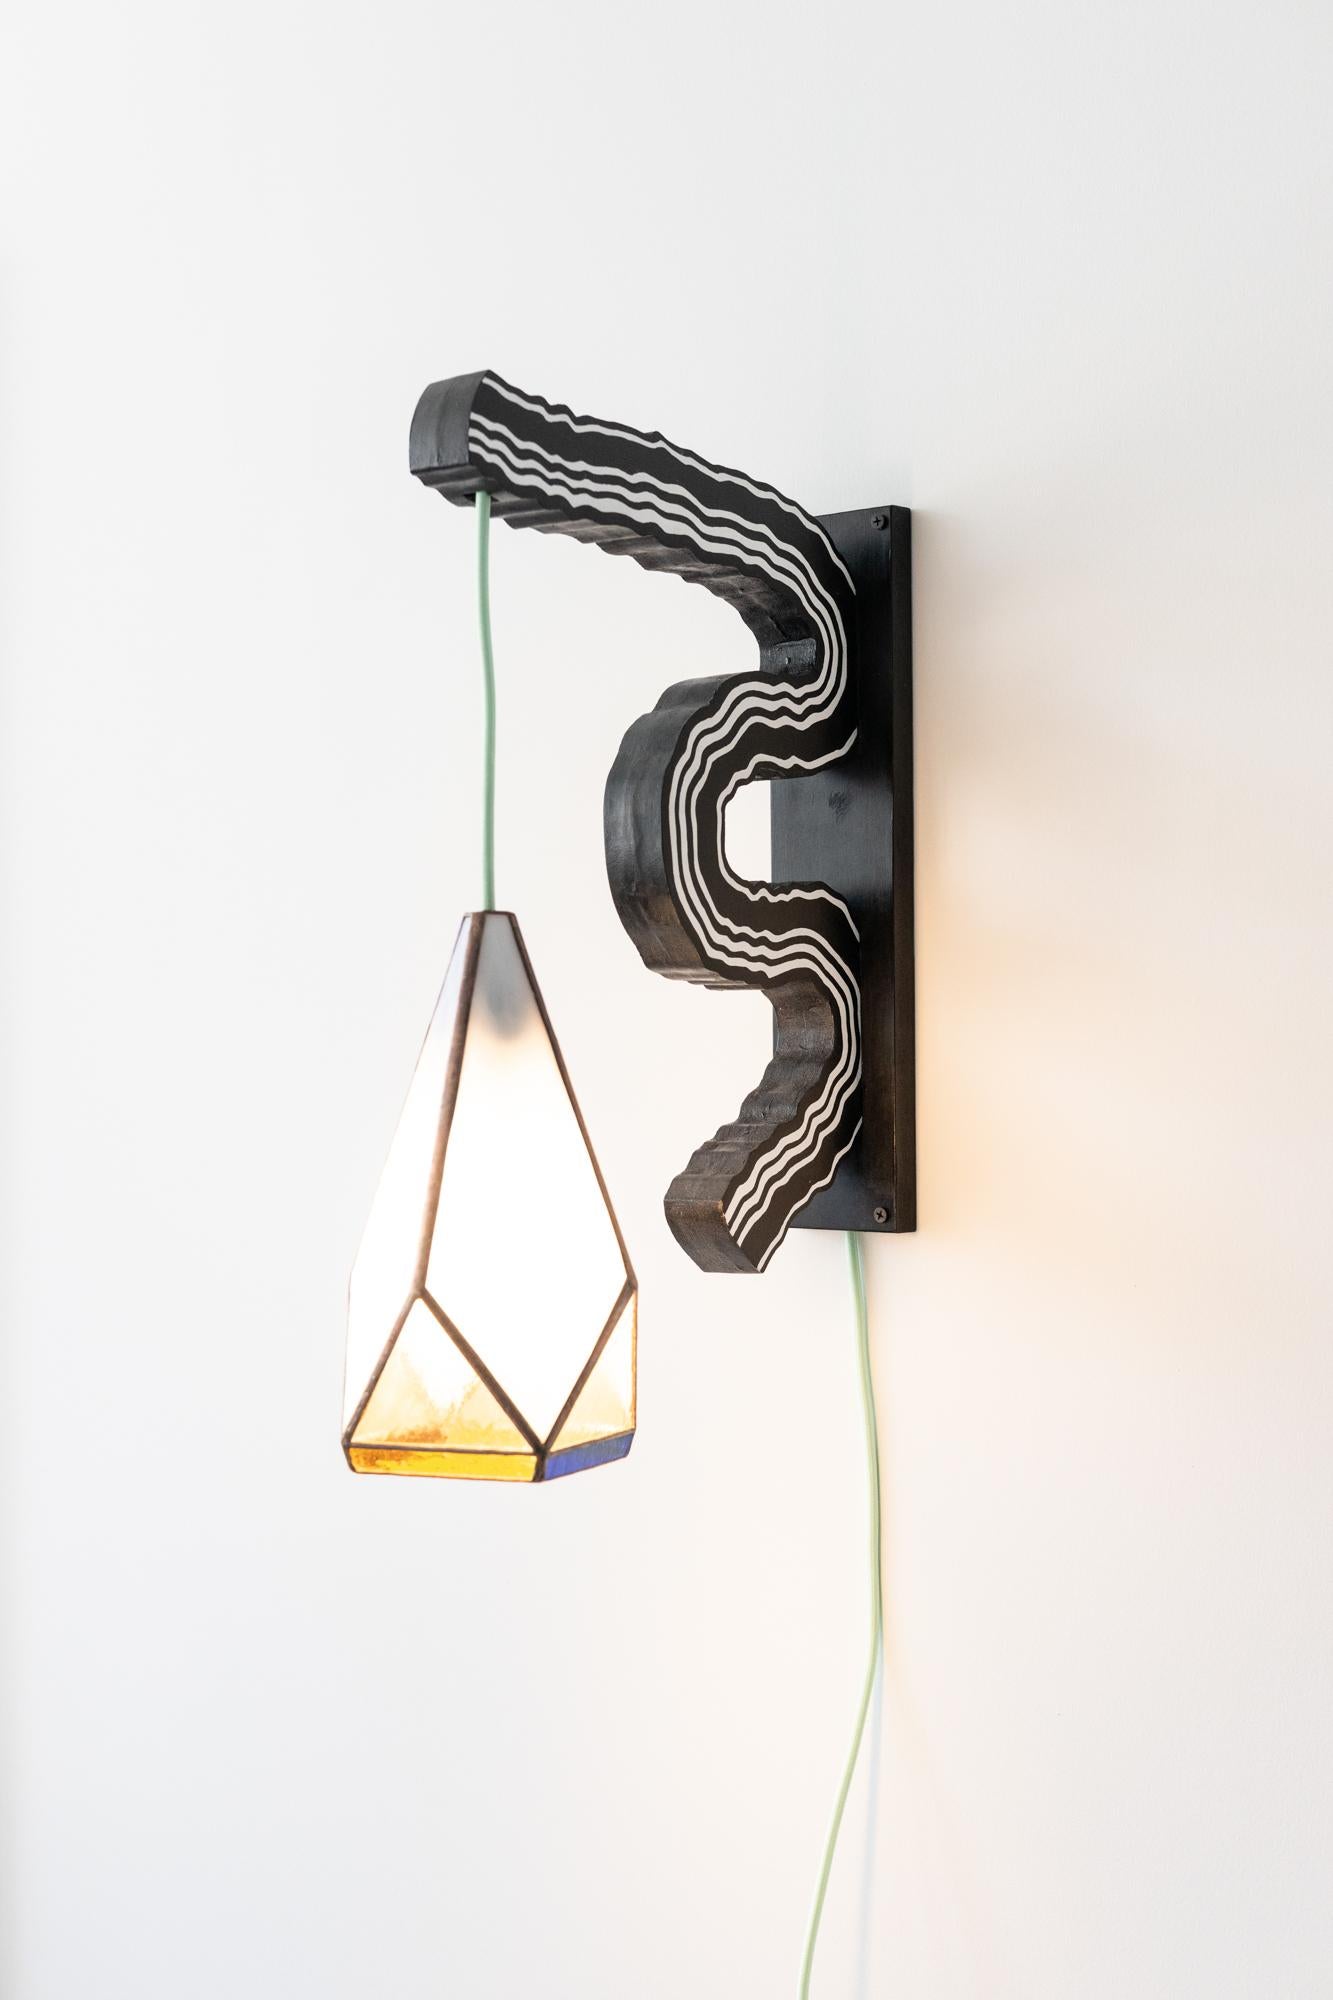 Abstract Sculpture Jason Andrew Turner - Poteau d'éclairage